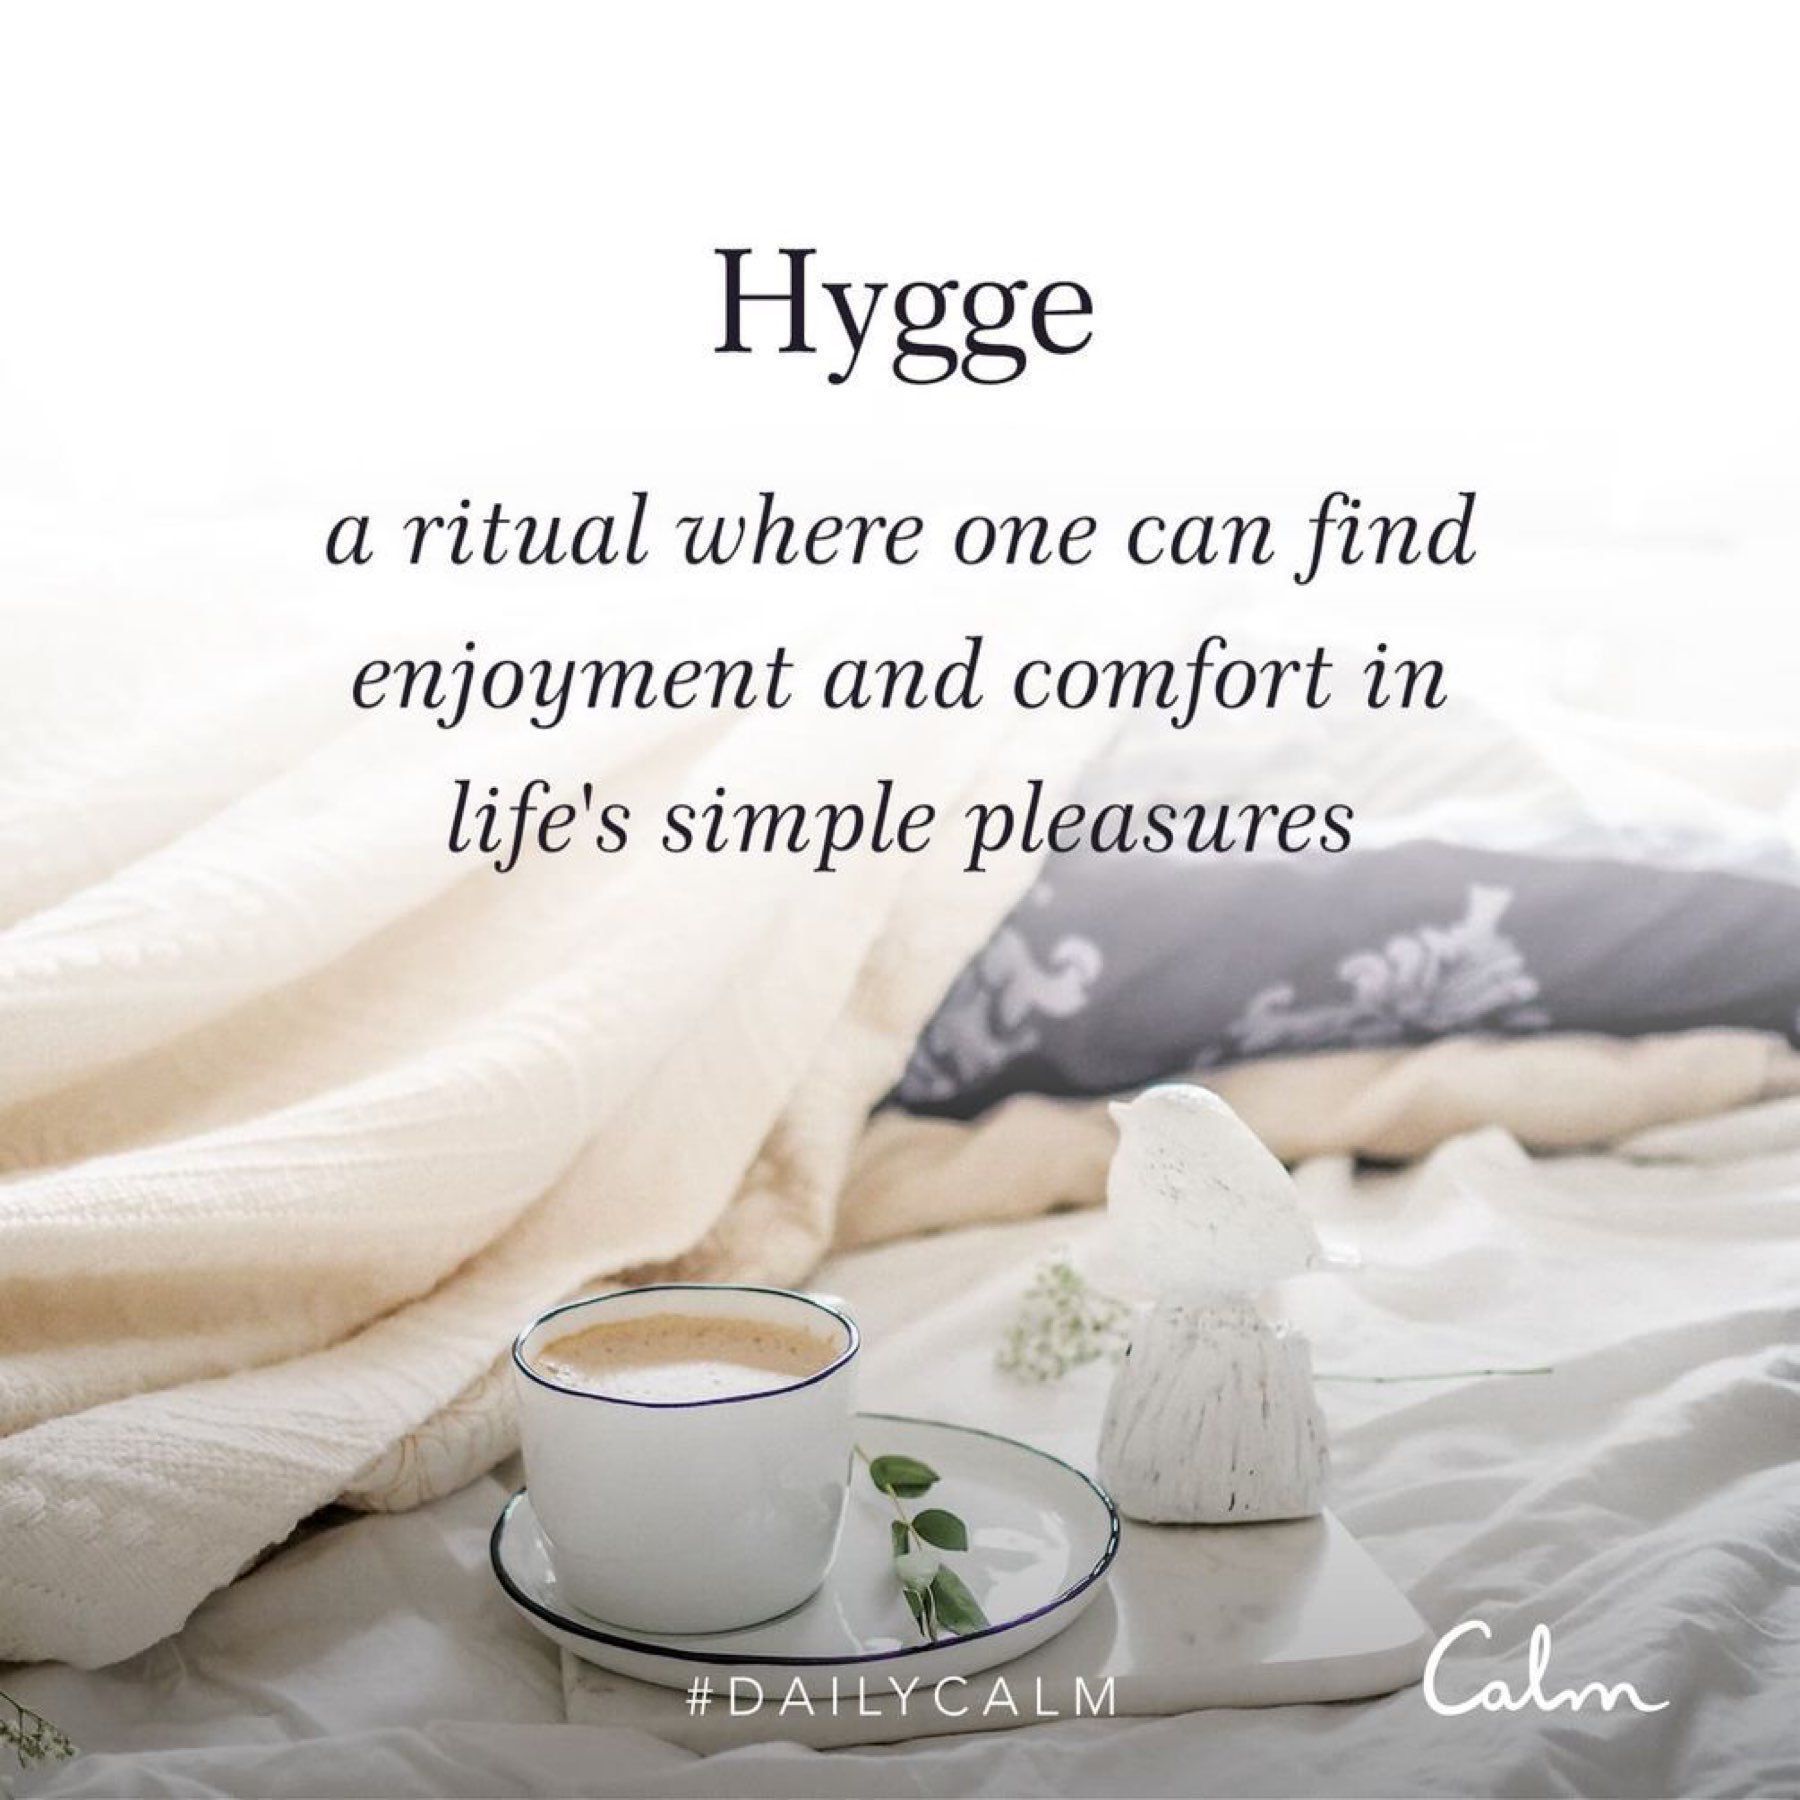 Hygge: a ritual of self care that brings pleasure and joy